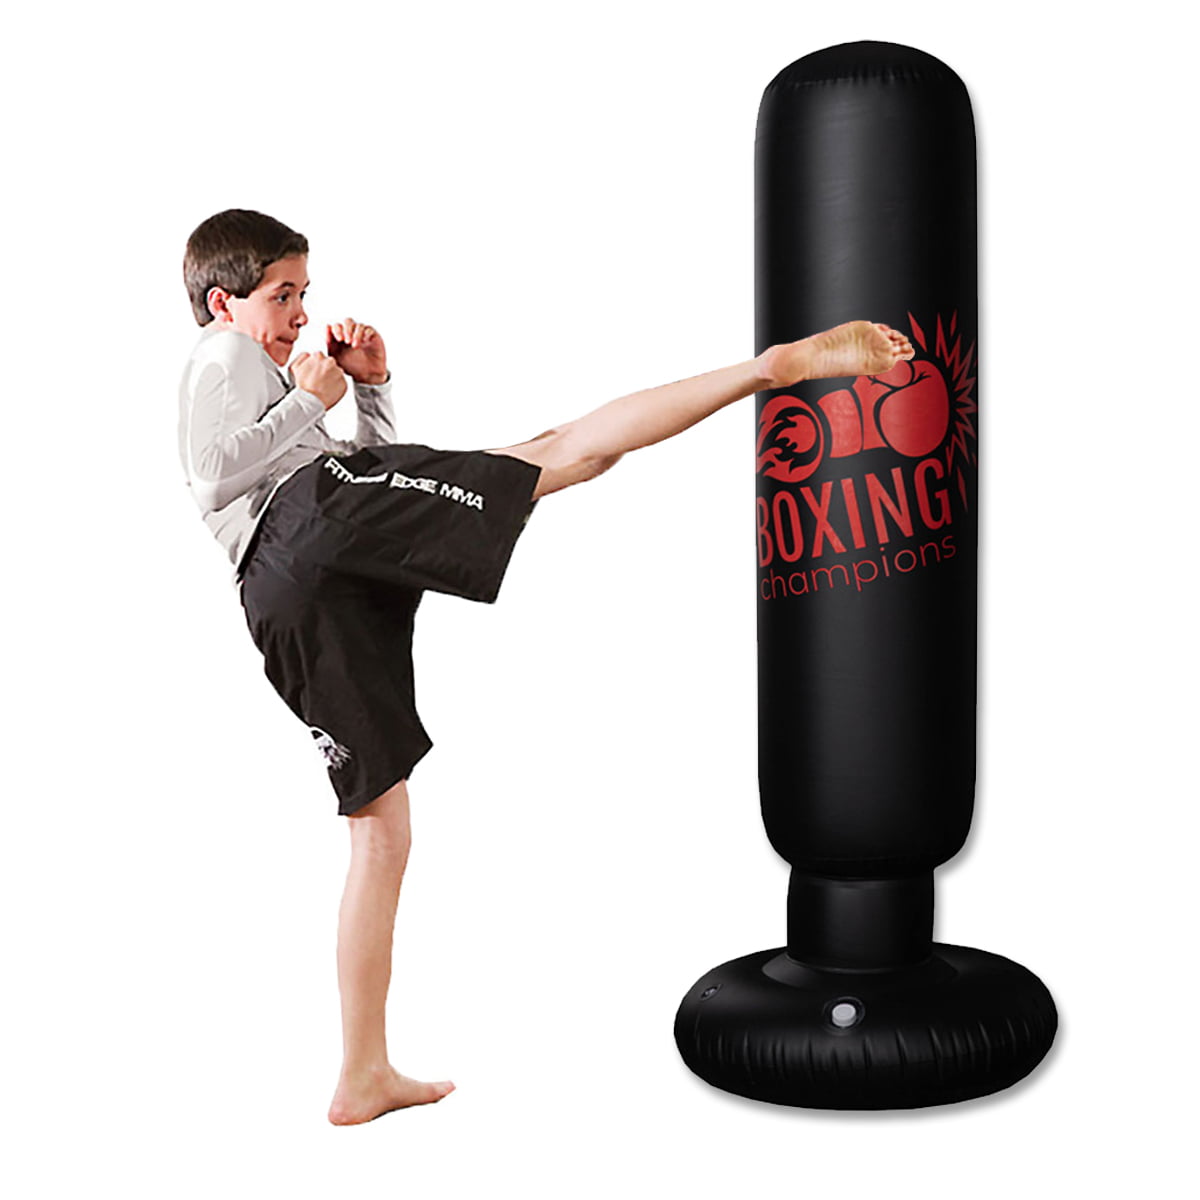 Kung Fu Punching Bag MMA Boxing Sandbags Target Sparring Safety Training